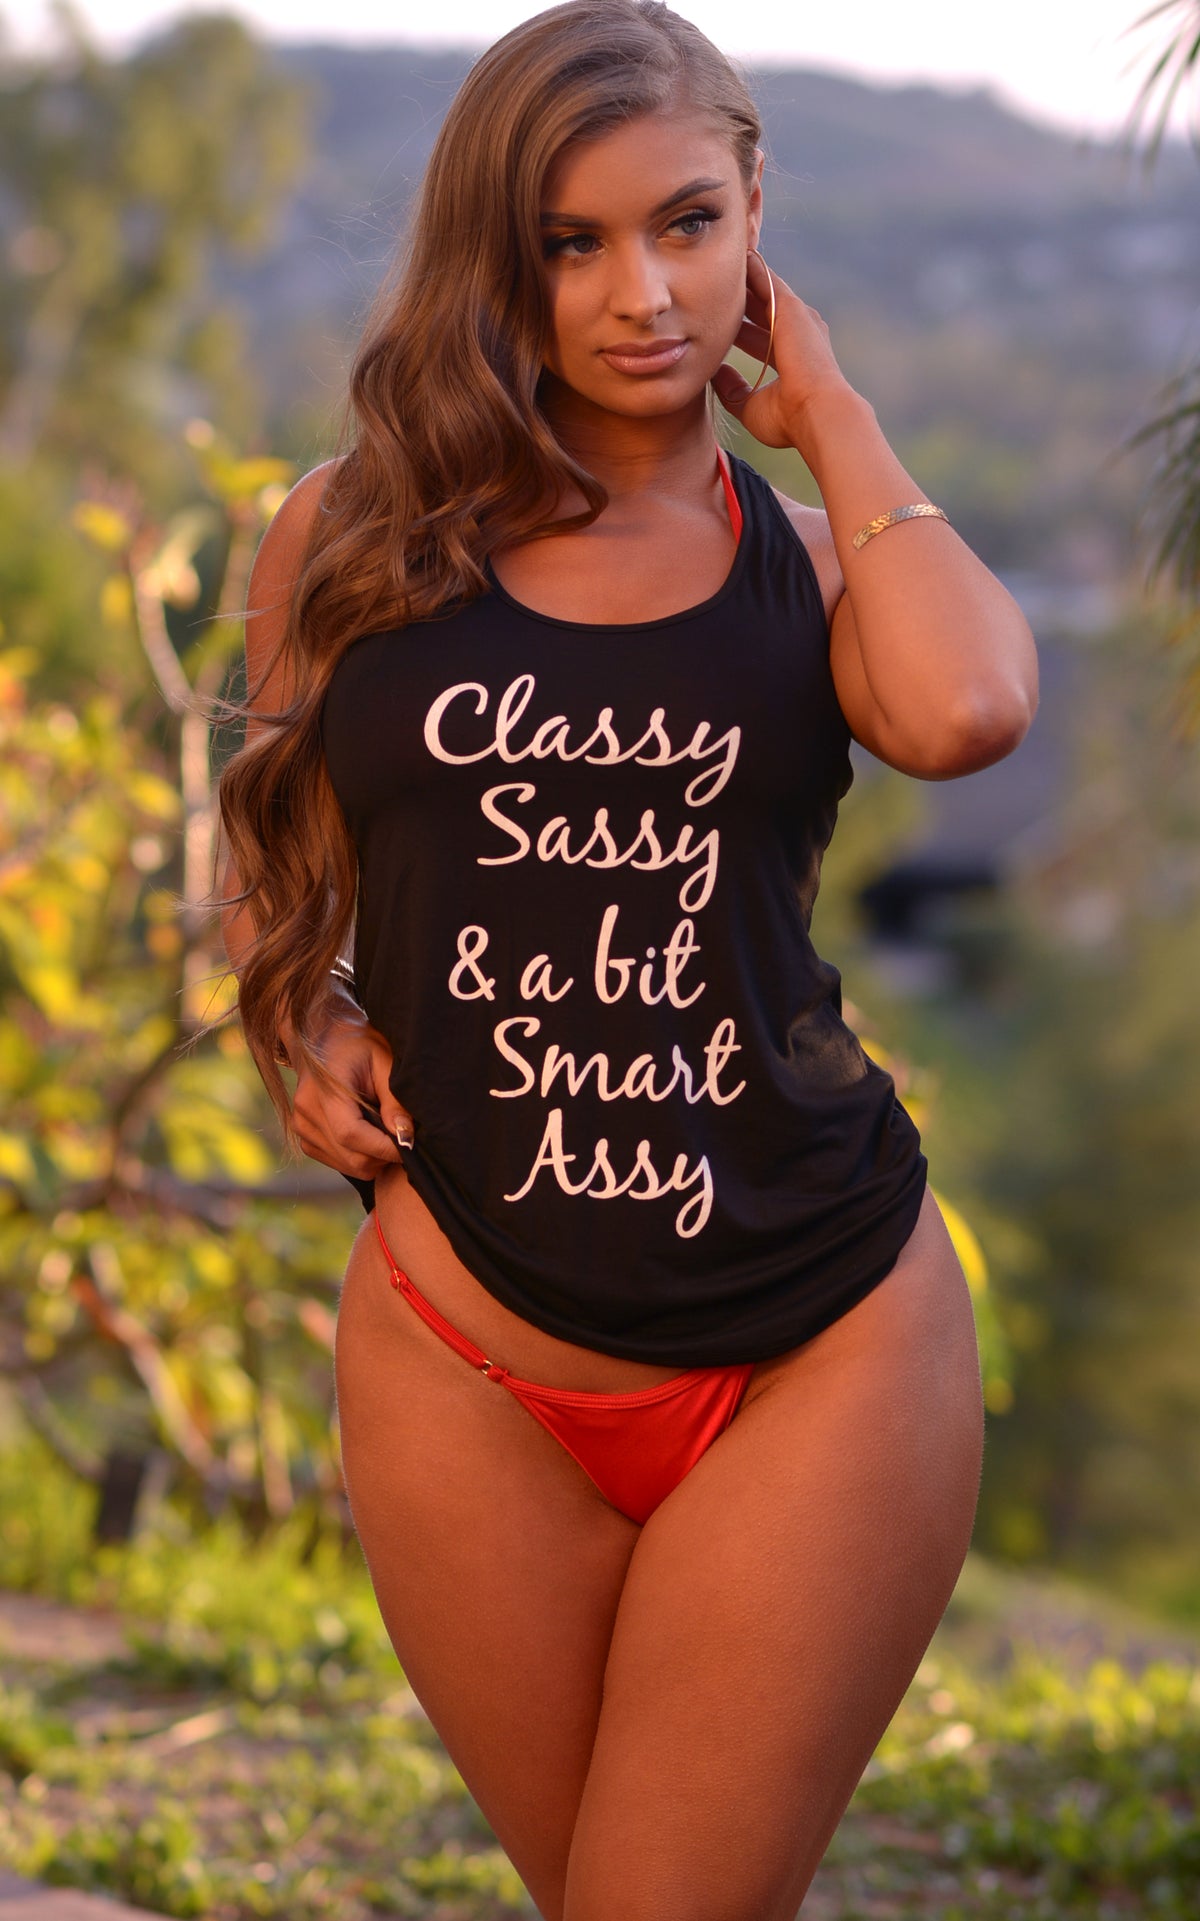 Summer Tank Top: "Classy, Sassy & a bit Smart Assy" - Chynna Dolls Swimwear